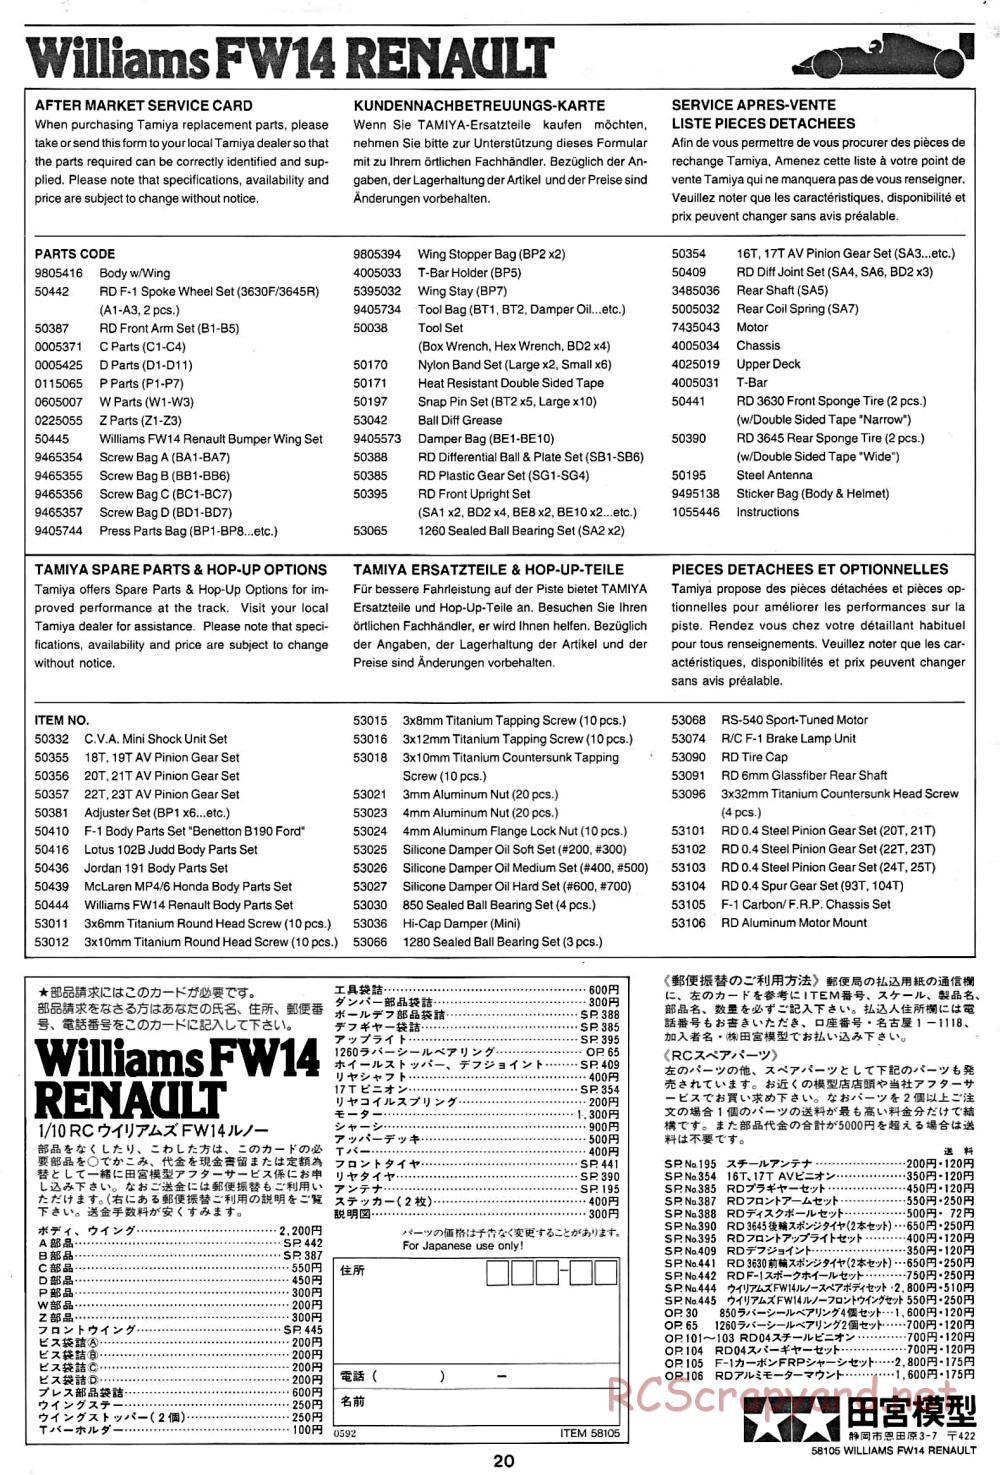 Tamiya - Williams FW14 Renault - F102 Chassis - Manual - Page 20